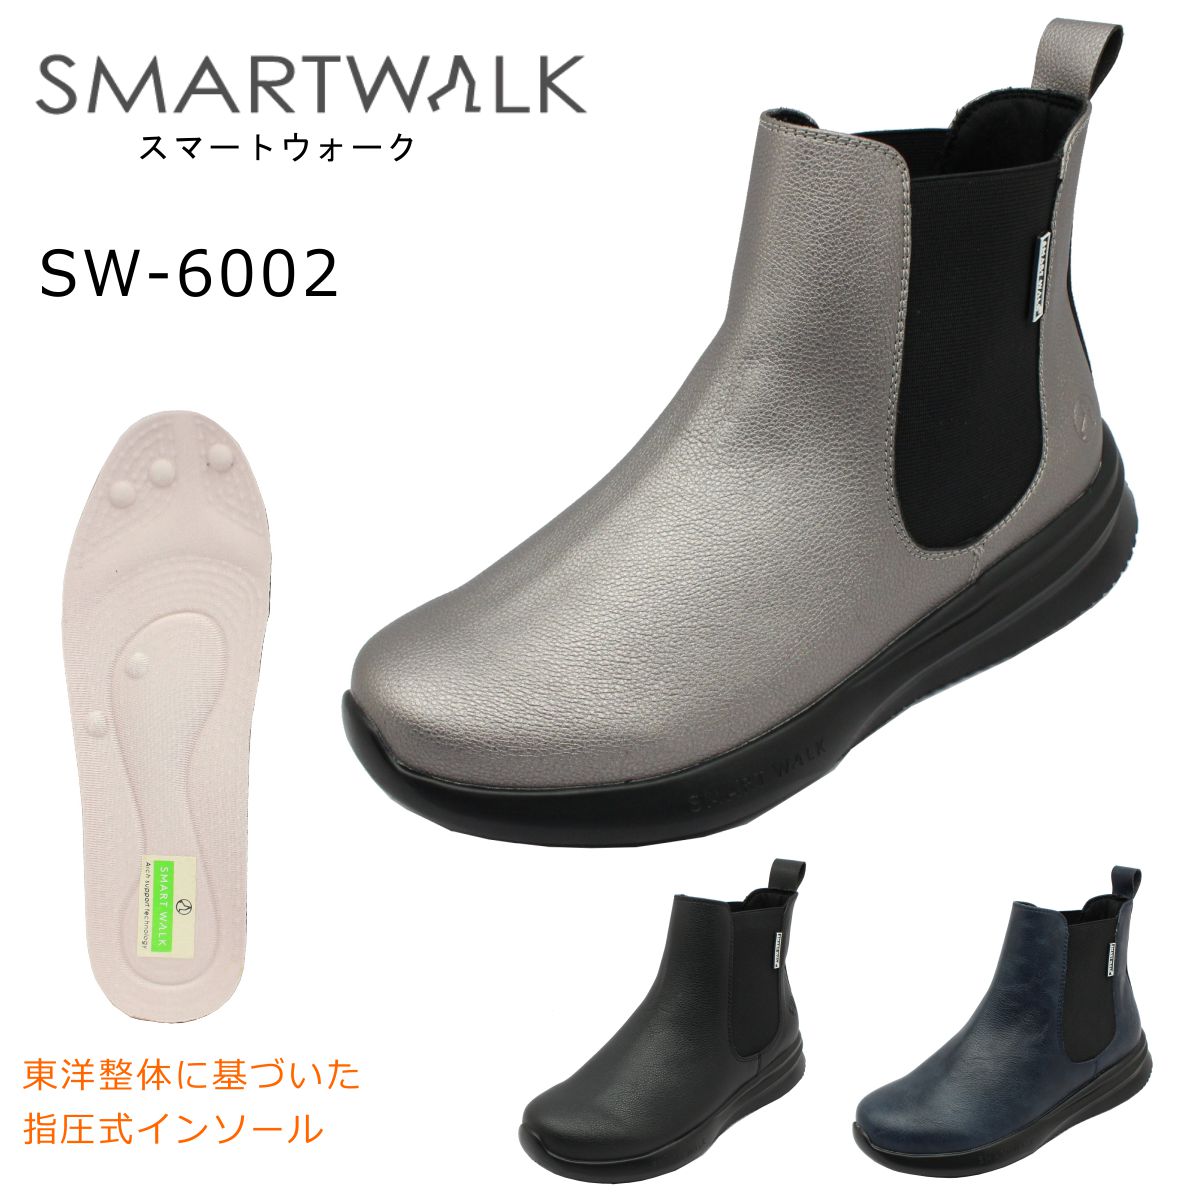 SMARTWALK スマートウォーク レディース SW-6002 サイドゴア ウォーキングシューズ スニーカー ショートブーツ 婦人靴 6002 足首丈のショートブーツはどんなボトムスとも相性が良く、スカートにもパンツにも合わせやすい定番デザイン。 サイドゴアは足入れがしやすいだけでなく、甲回りのフィット感が抜群です。 指圧式ふかふかインソールが足裏にある左右非対称のツボを優しく刺激し、毎日の歩行で「知らず知らずのうちに」ツボ押しの効果を実感できます。 (1).超軽量-スーパーライト 片足たったの230g。靴本体180g＋インソール50gの超軽量シューズ (2).指圧式ふかふかインソール 歩くたびに快適な疲れ知らずのふかふかインソール (3).柔軟性-フレキシブル 屈曲性・弾力性がバツグンだから歩きやすい (4).東洋整体に基づいた「特殊サポートインソール」の開発 足裏にある左右非対称のツボを優しく刺激します。毎日の歩行で「知らず知らずのうちに」ツボ押しの効果を実感できます。 ・3箇所のアーチサポート ・中足骨サポート ・15箇所のツボを優しく刺激 肝臓・腎臓・腸・生殖器・膀胱・胃・十二指腸・肩・喉・肺・心臓・脾臓・目・耳・鼻 ■商品詳細（23.0cm計測） ・フィティング：標準サイズ ・素材：合成繊維・合成ゴム ・重量：約230gSMARTWALK スマートウォーク レディース SW-6002 サイドゴア ウォーキングシューズ スニーカー ショートブーツ 婦人靴 6002 足首丈のショートブーツはどんなボトムスとも相性が良く、スカートにもパンツにも合わせやすい定番デザイン。 サイドゴアは足入れがしやすいだけでなく、甲回りのフィット感が抜群です。 指圧式ふかふかインソールが足裏にある左右非対称のツボを優しく刺激し、毎日の歩行で「知らず知らずのうちに」ツボ押しの効果を実感できます。(1).超軽量-スーパーライト 片足たったの200g。靴本体150g＋インソール50gの超軽量シューズ(2).指圧式ふかふかインソール 歩くたびに快適な疲れ知らずのふかふかインソール(3).柔軟性-フレキシブル 屈曲性・弾力性がバツグンだから歩きやすい(4).東洋整体に基づいた「特殊サポートインソール」の開発 足裏にある左右非対称のツボを優しく刺激します。毎日の歩行で「知らず知らずのうちに」ツボ押しの効果を実感できます。 ・3箇所のアーチサポート ・中足骨サポート ・15箇所のツボを優しく刺激 肝臓・腎臓・腸・生殖器・膀胱・胃・十二指腸・肩・喉・肺・心臓・脾臓・目・耳・鼻■商品詳細（23.0cm計測） ・フィティング：標準サイズ ・素材：合成繊維・合成ゴム ・重量：約230g